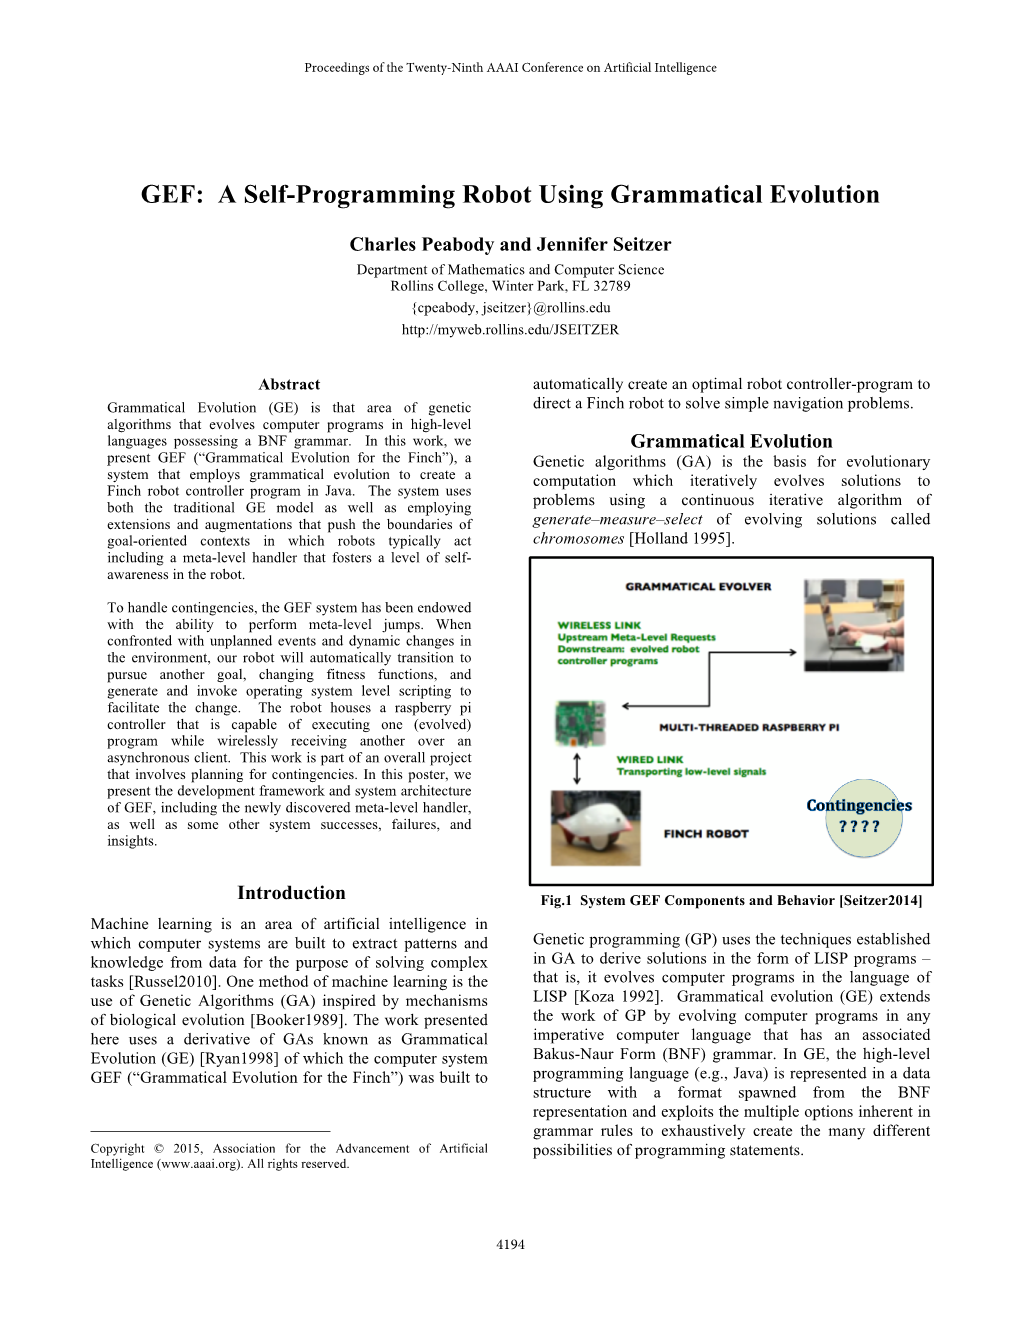 GEF: a Self-Programming Robot Using Grammatical Evolution